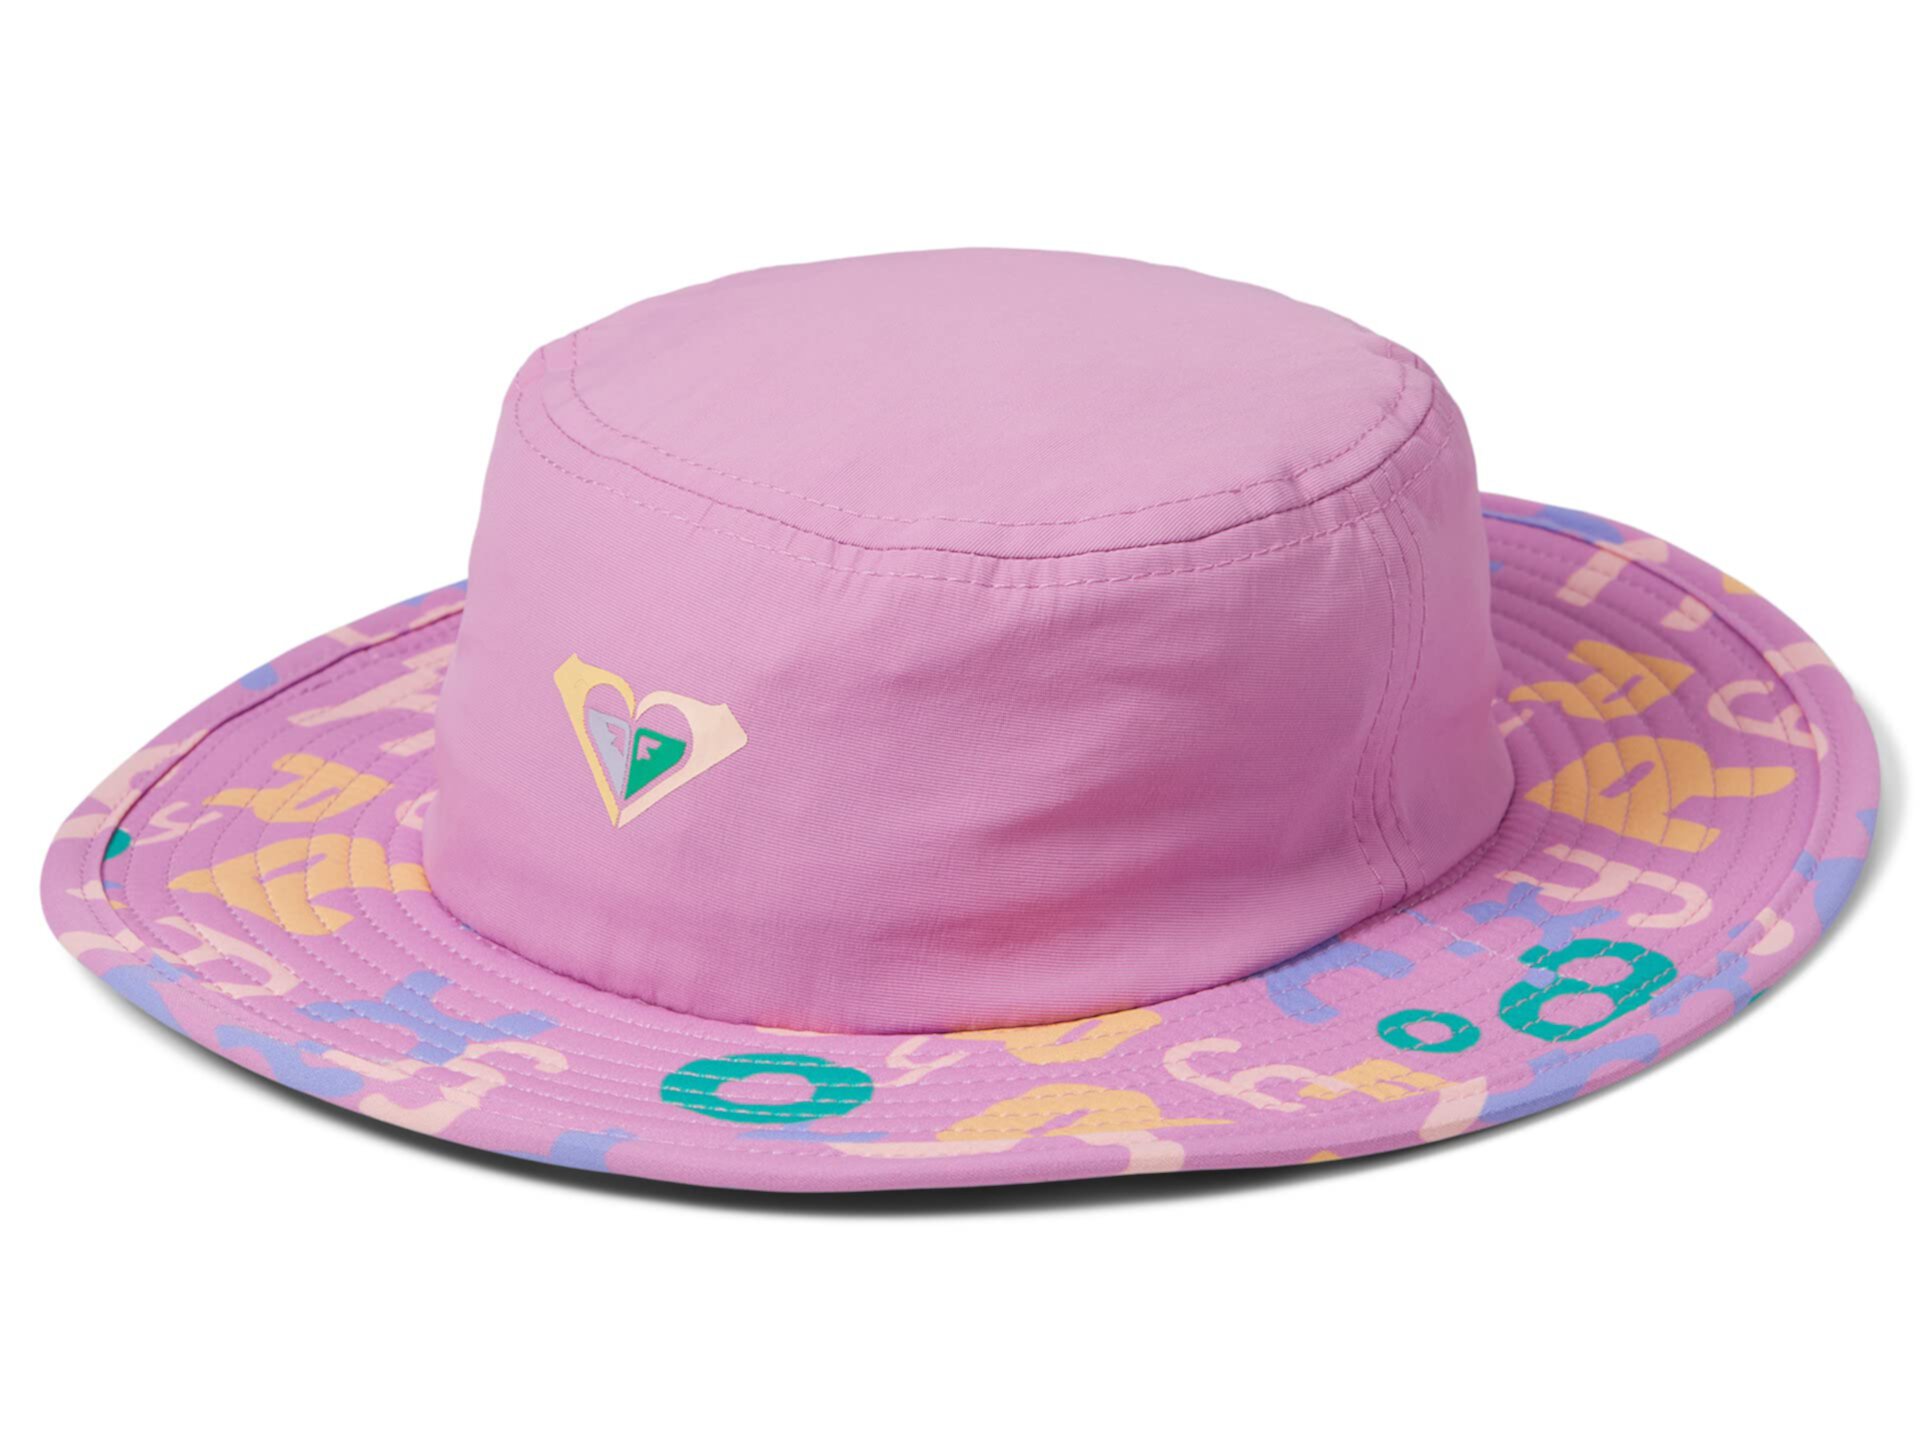 Шляпа-ведро с тортом-пудингом (Маленькие дети) Roxy Kids